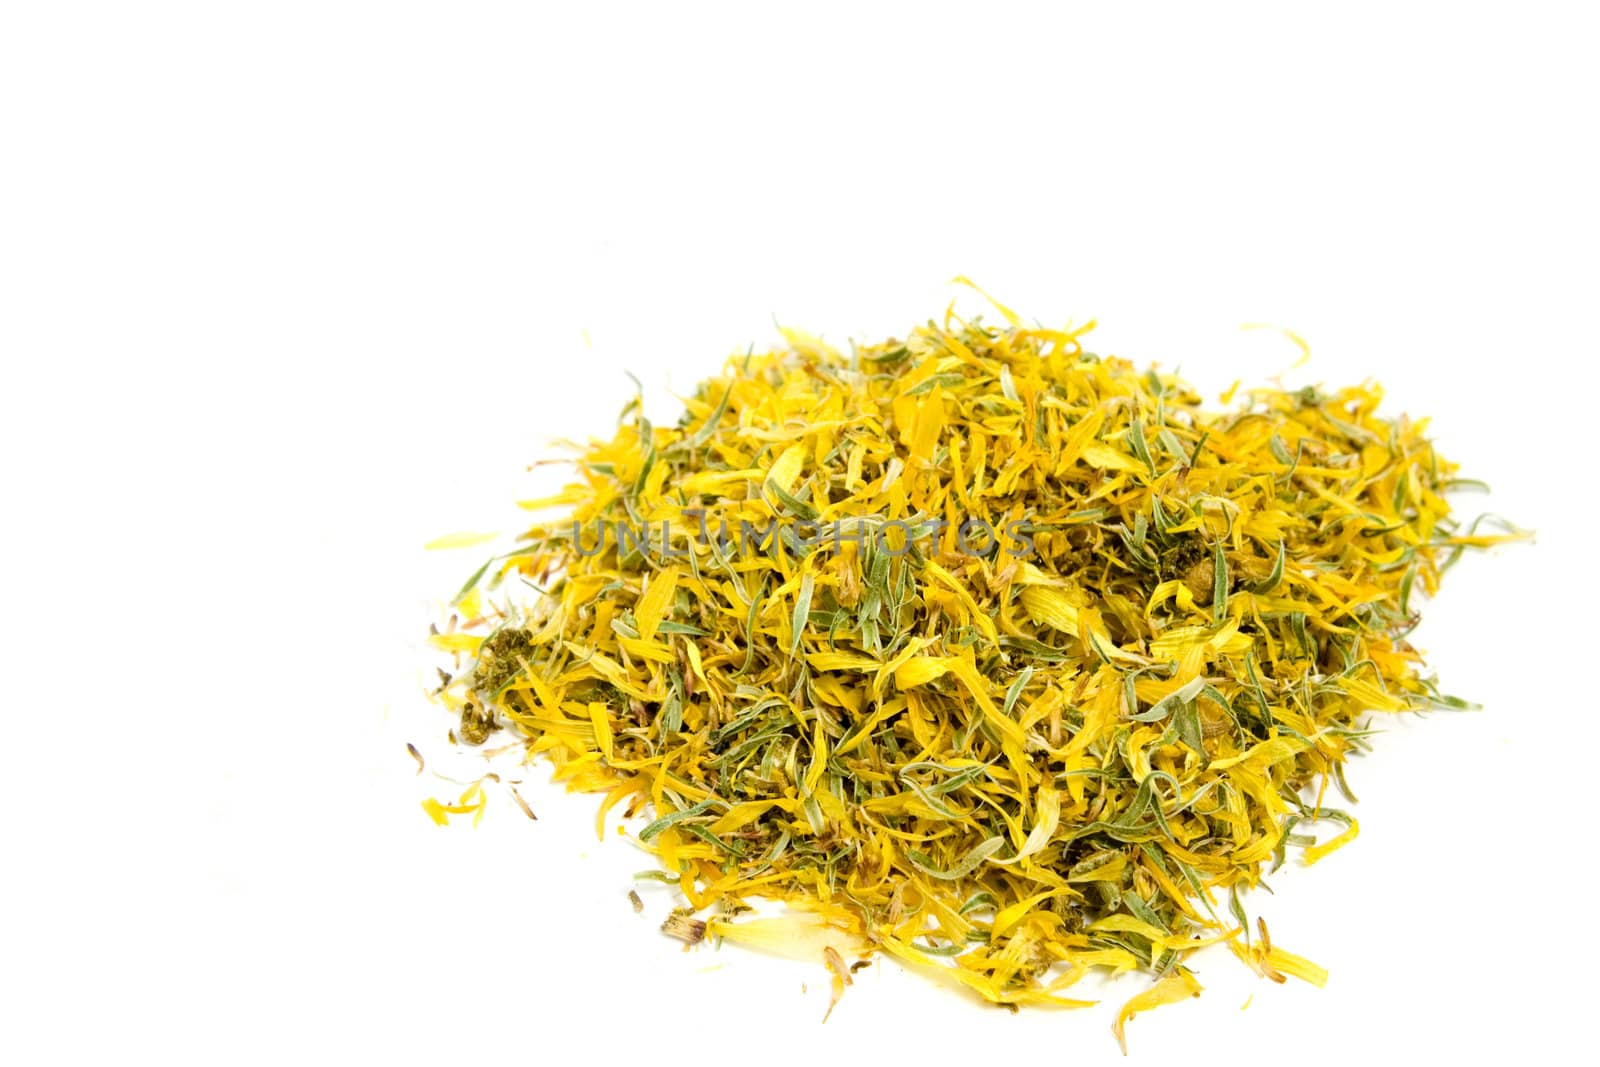 dry calendula (pot marigold) tea on white background